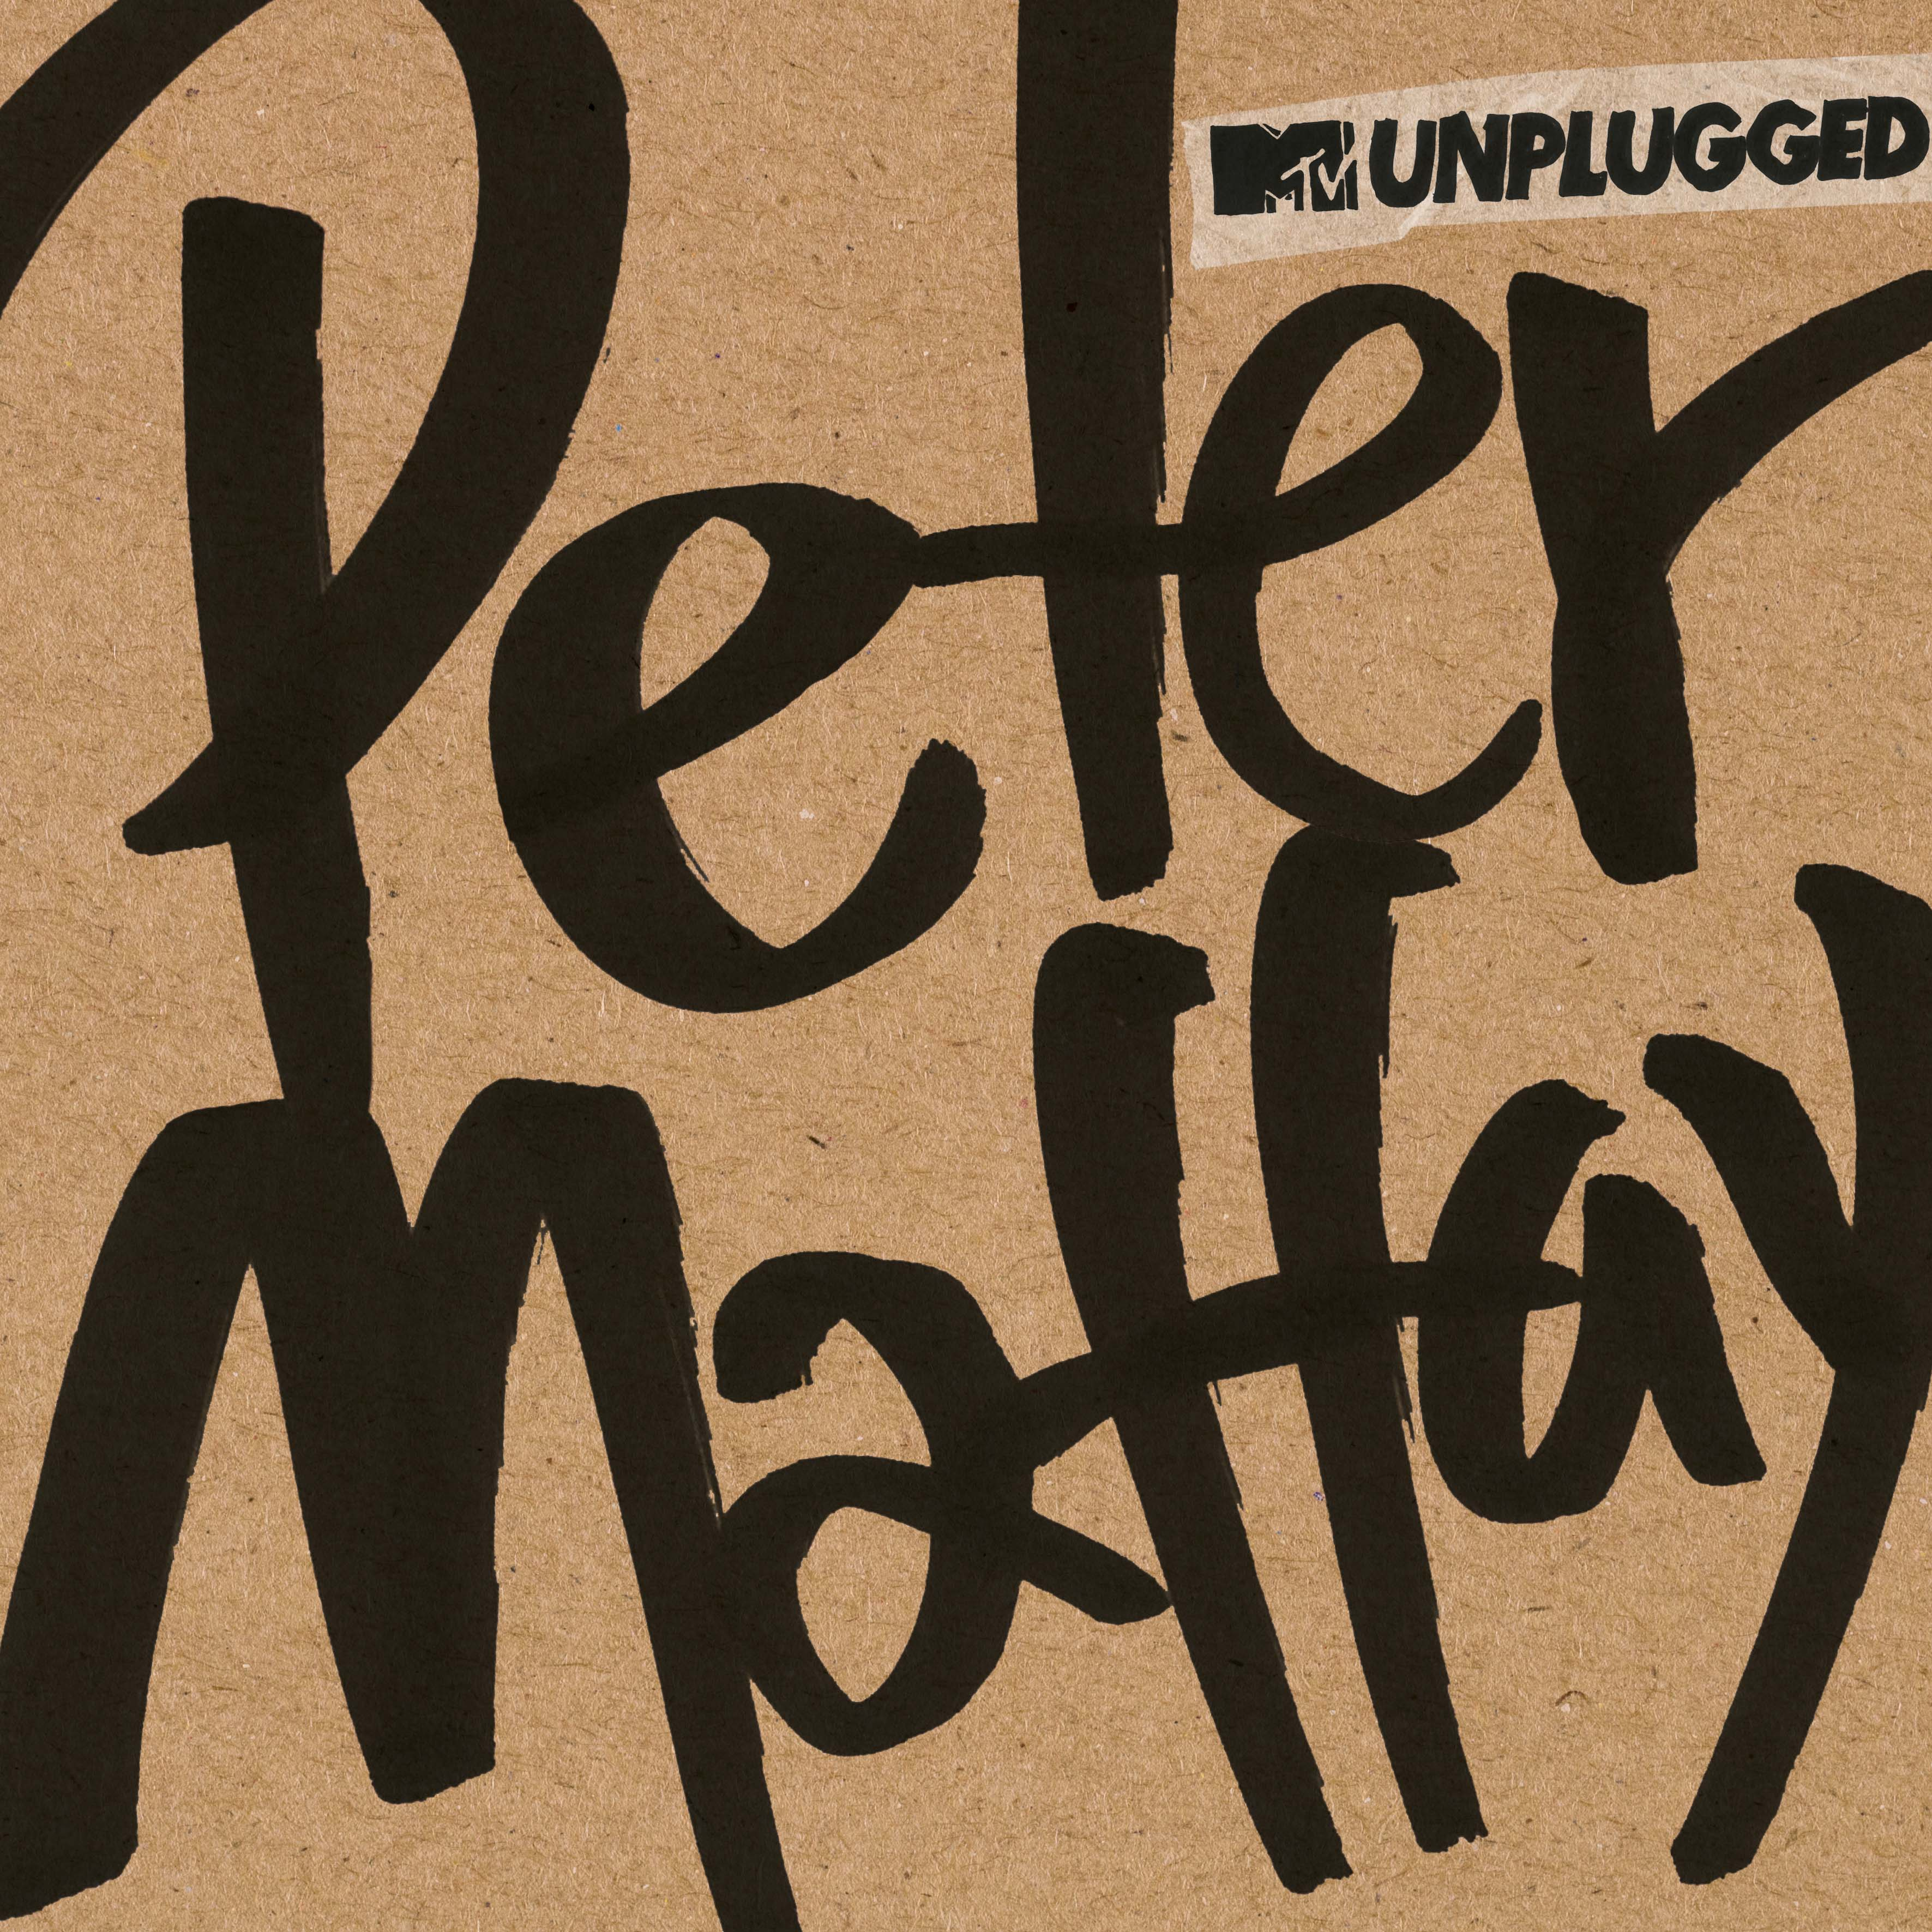 - (Vinyl) - Maffay Unplugged MTV Peter